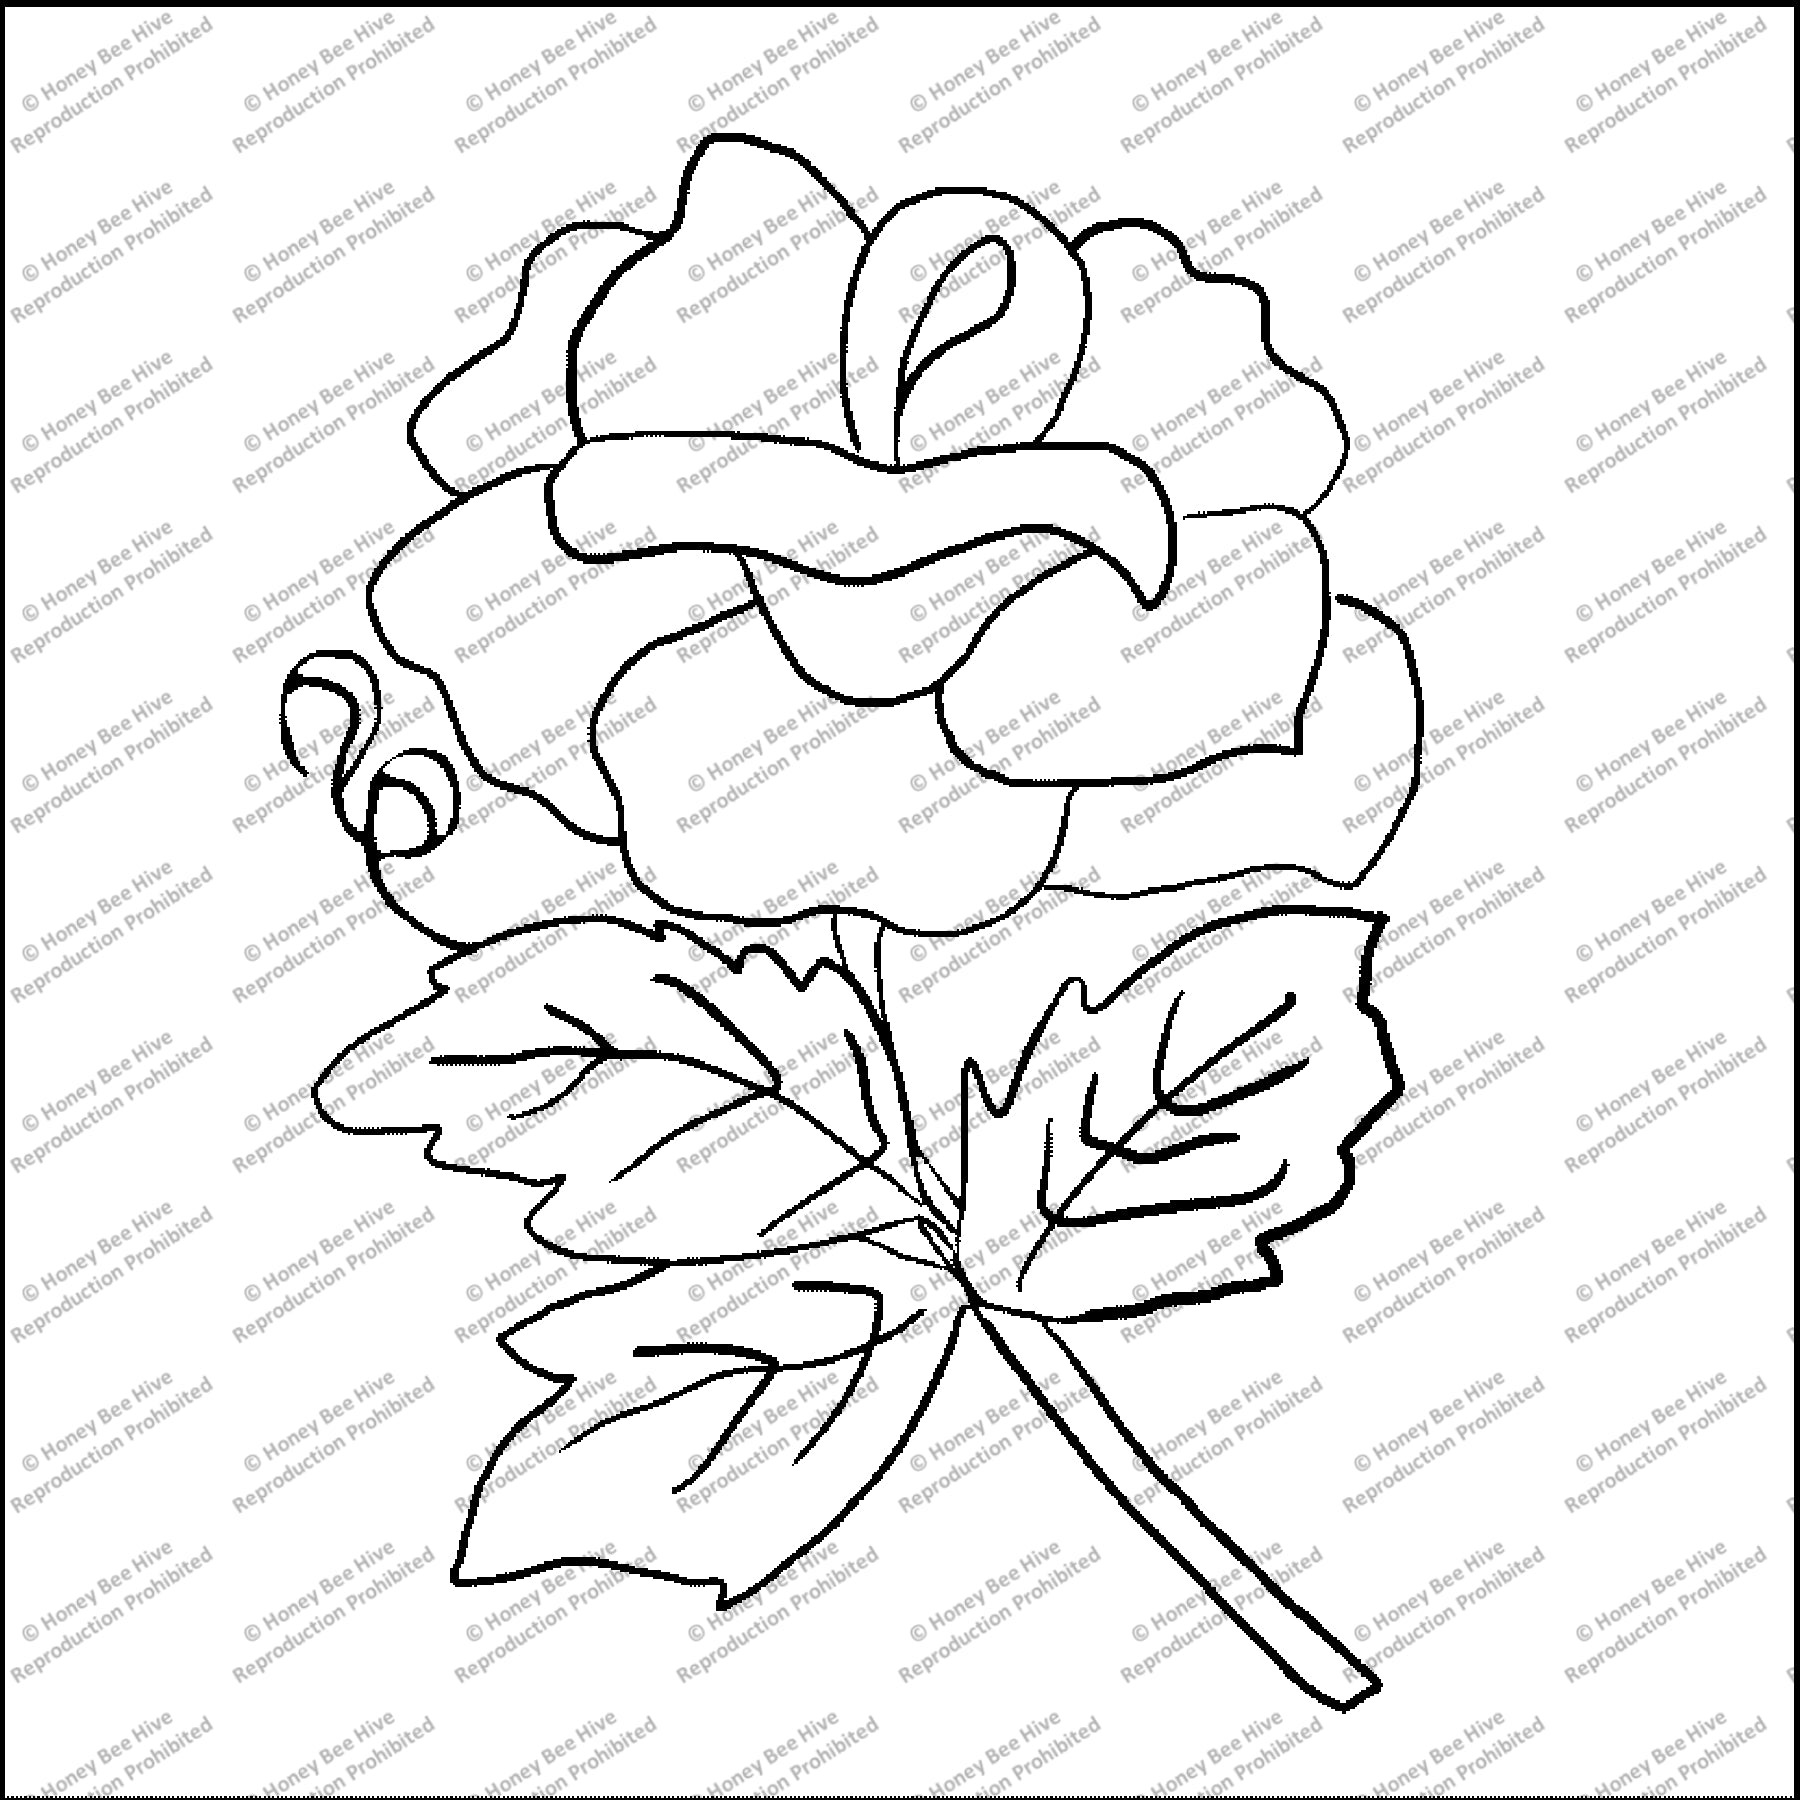 Rapture – Rose and Hydrangea, rug hooking pattern